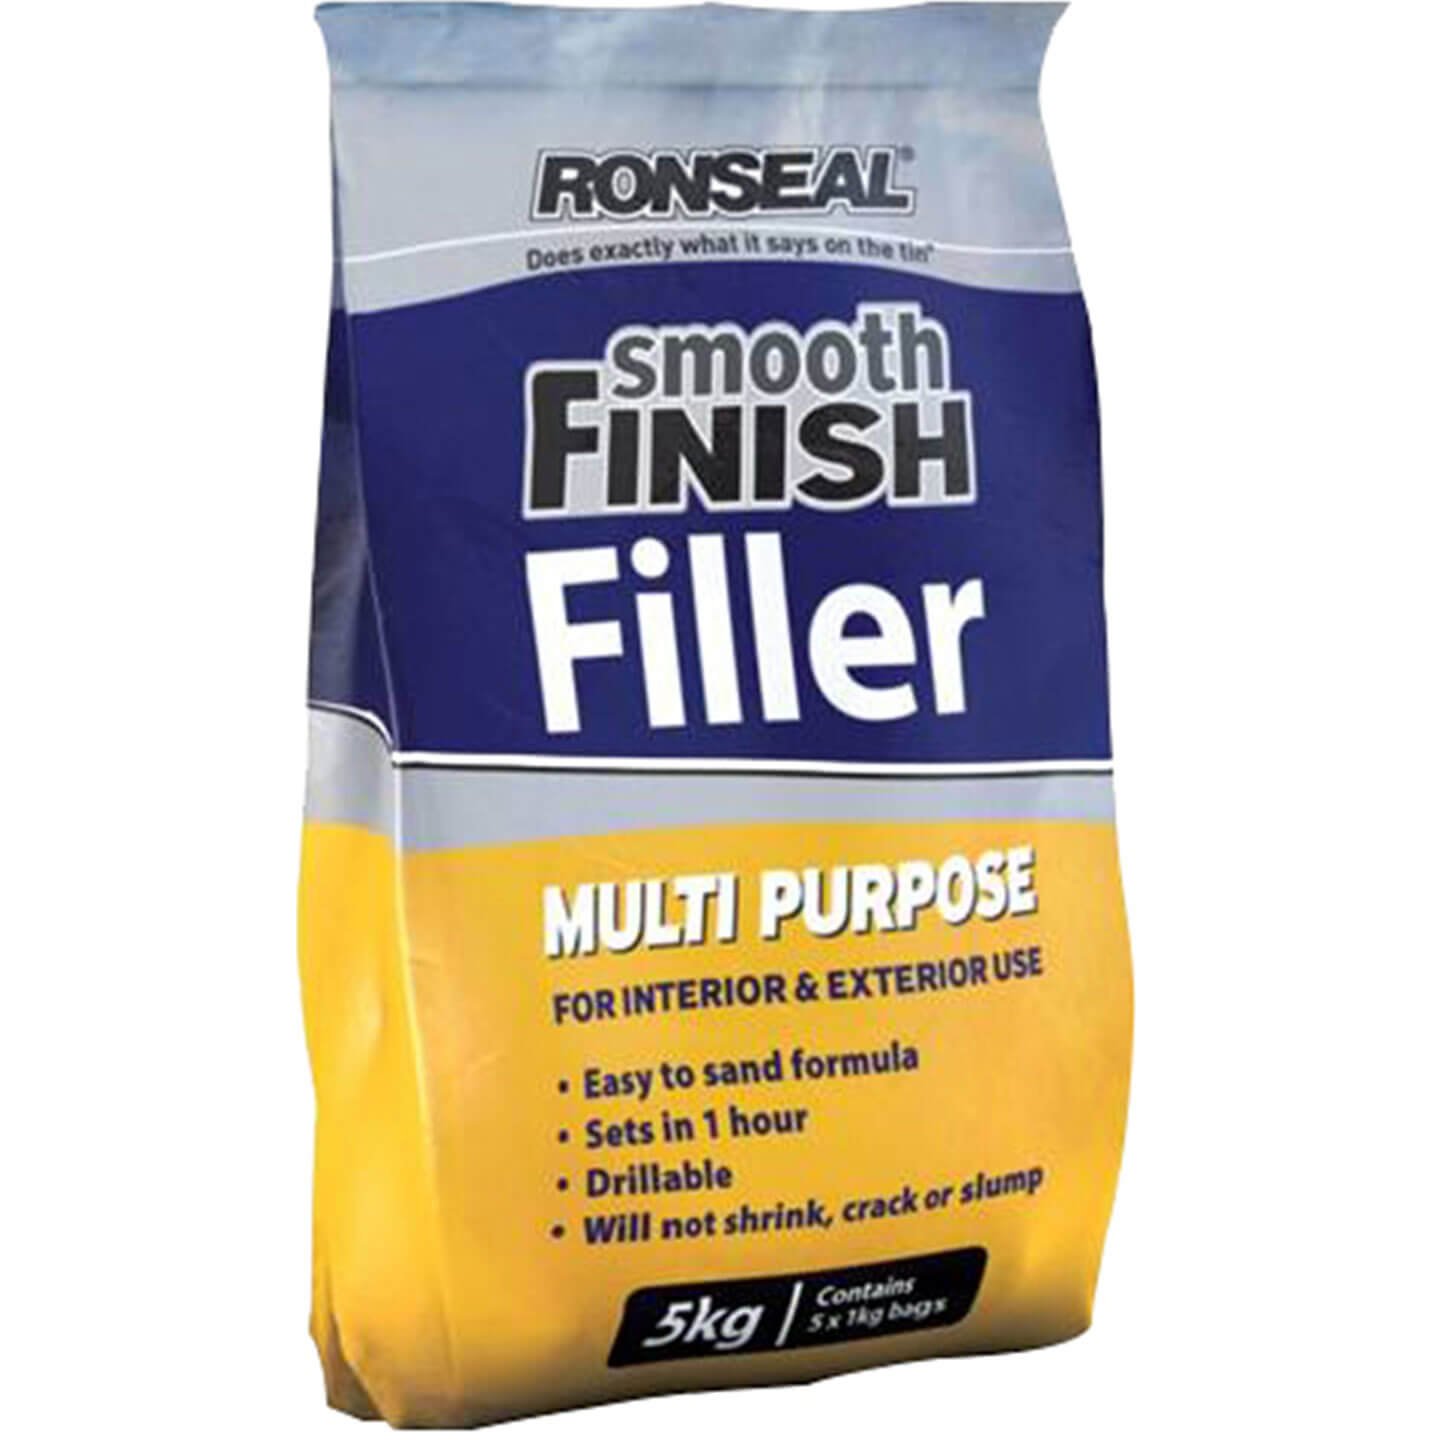 Image of Ronseal Smooth Finish Multi Purpose Interior Wall Powder Filler 5kg